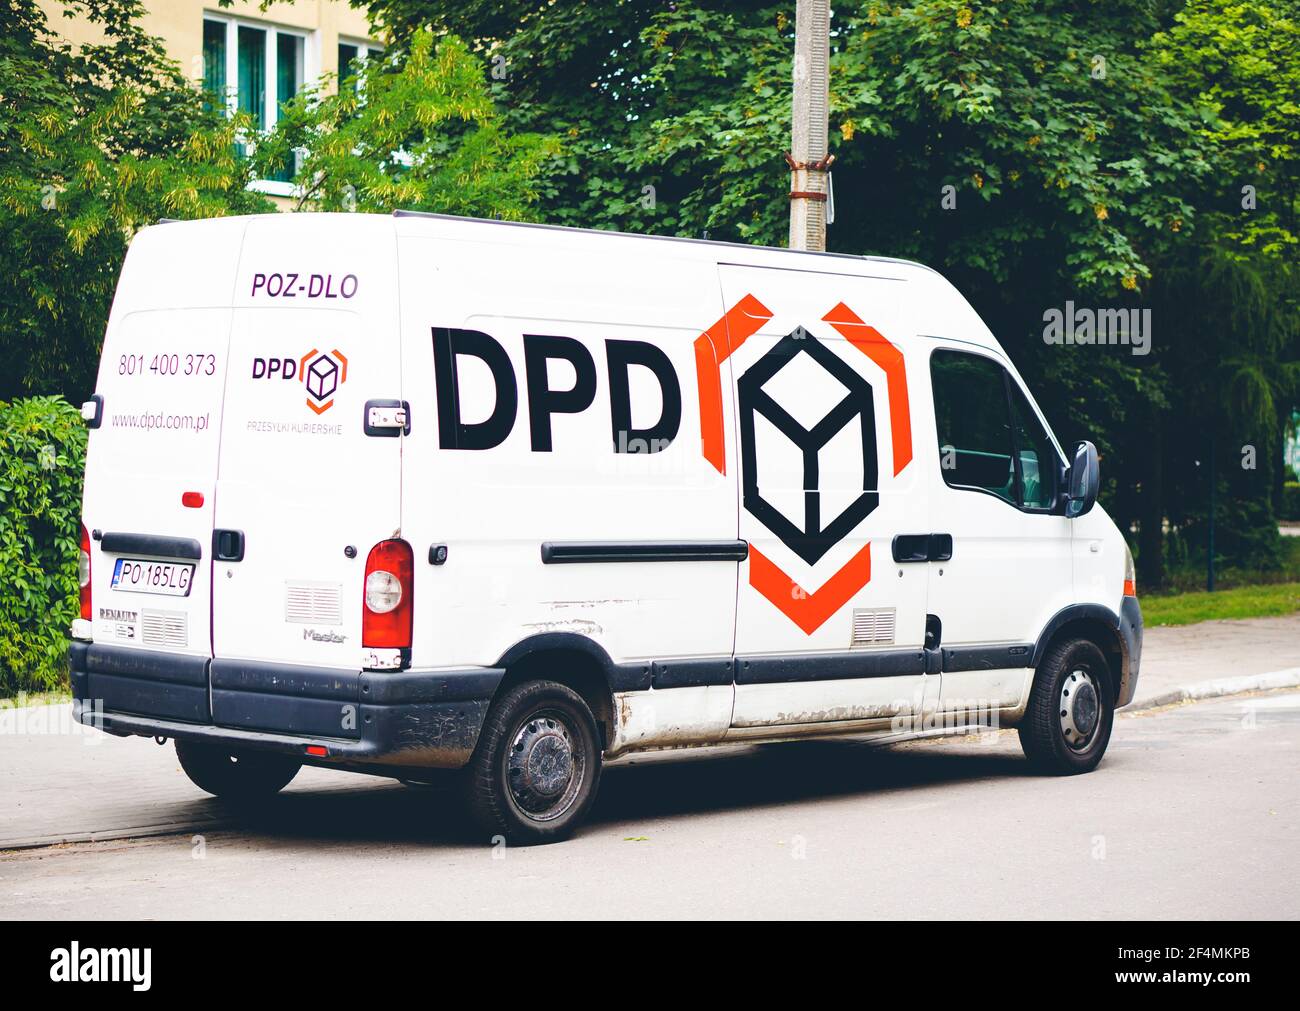 Dpd доставка телефоны. Dpd430-088.